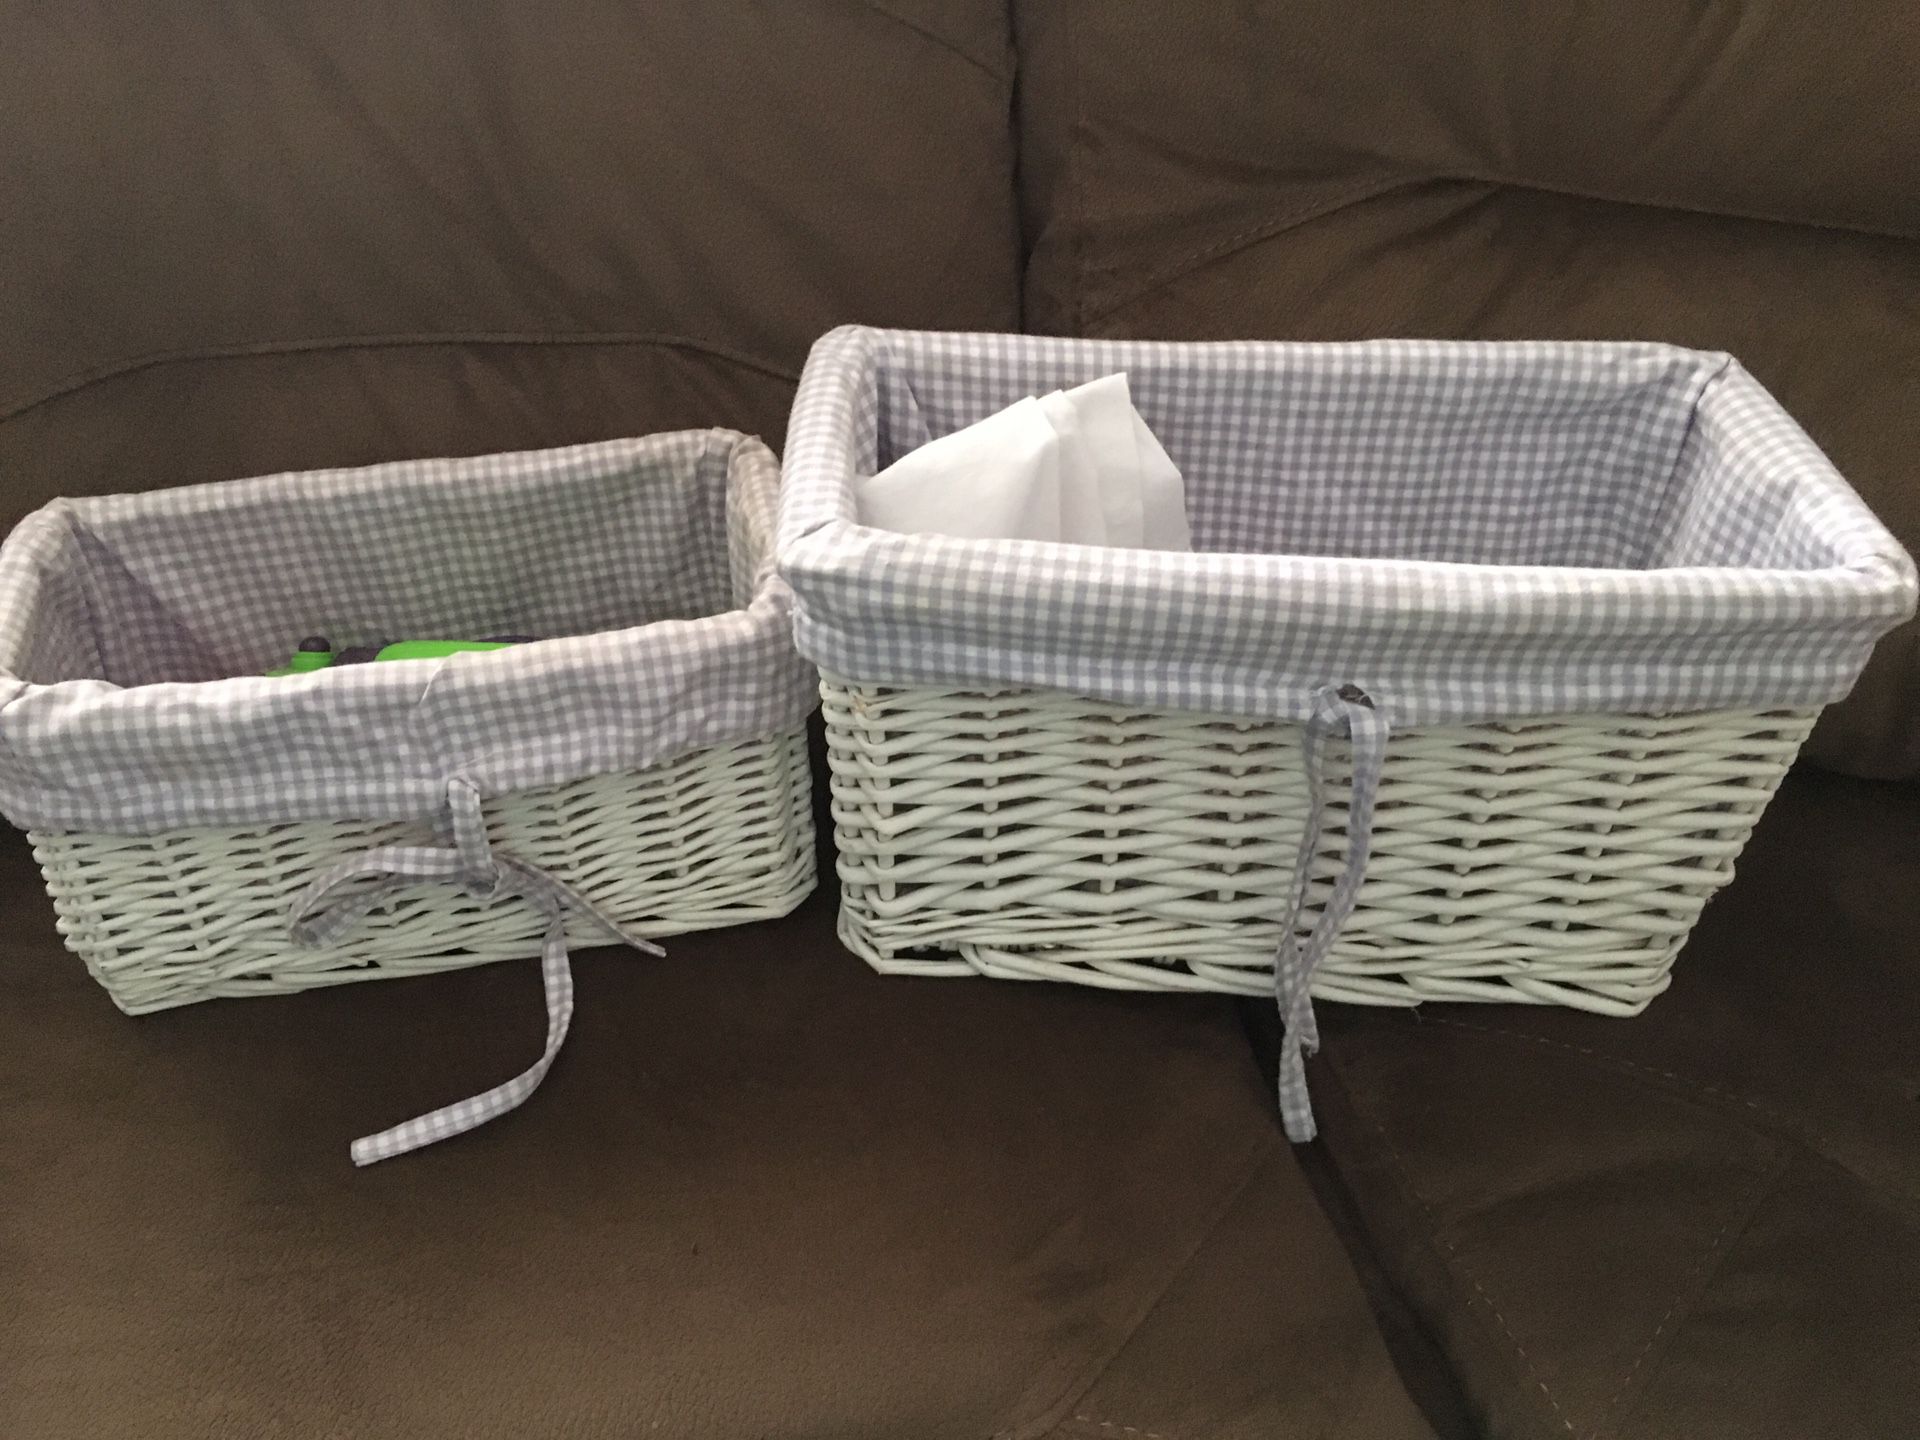 Two cute baskets